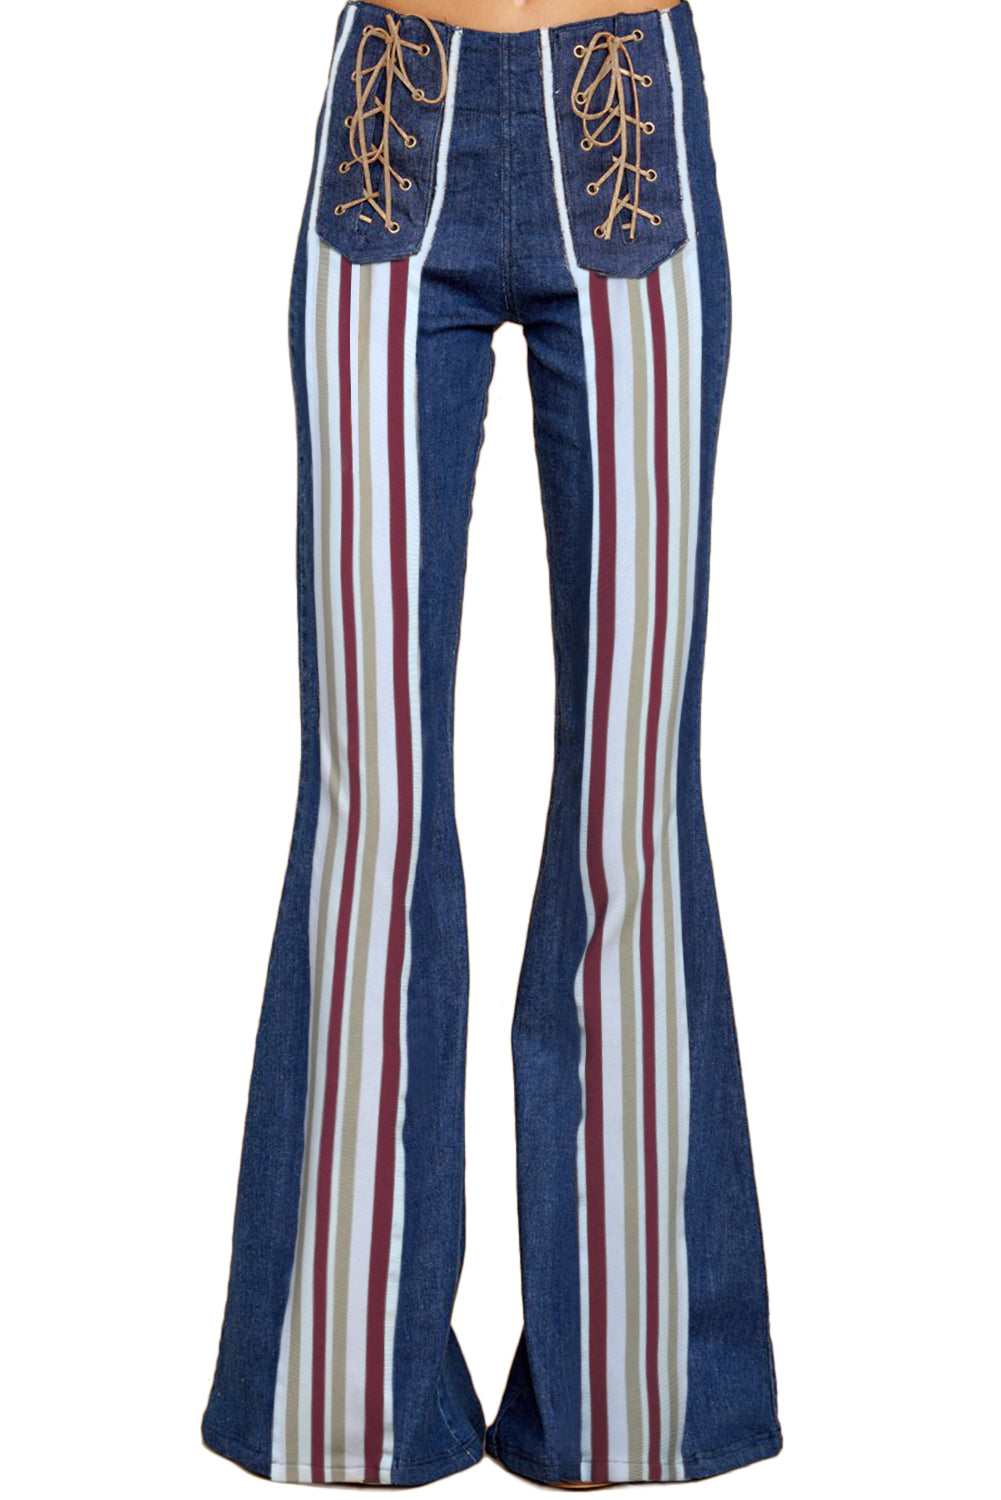 Pantaloni evazati cu dungi colorate D209-444